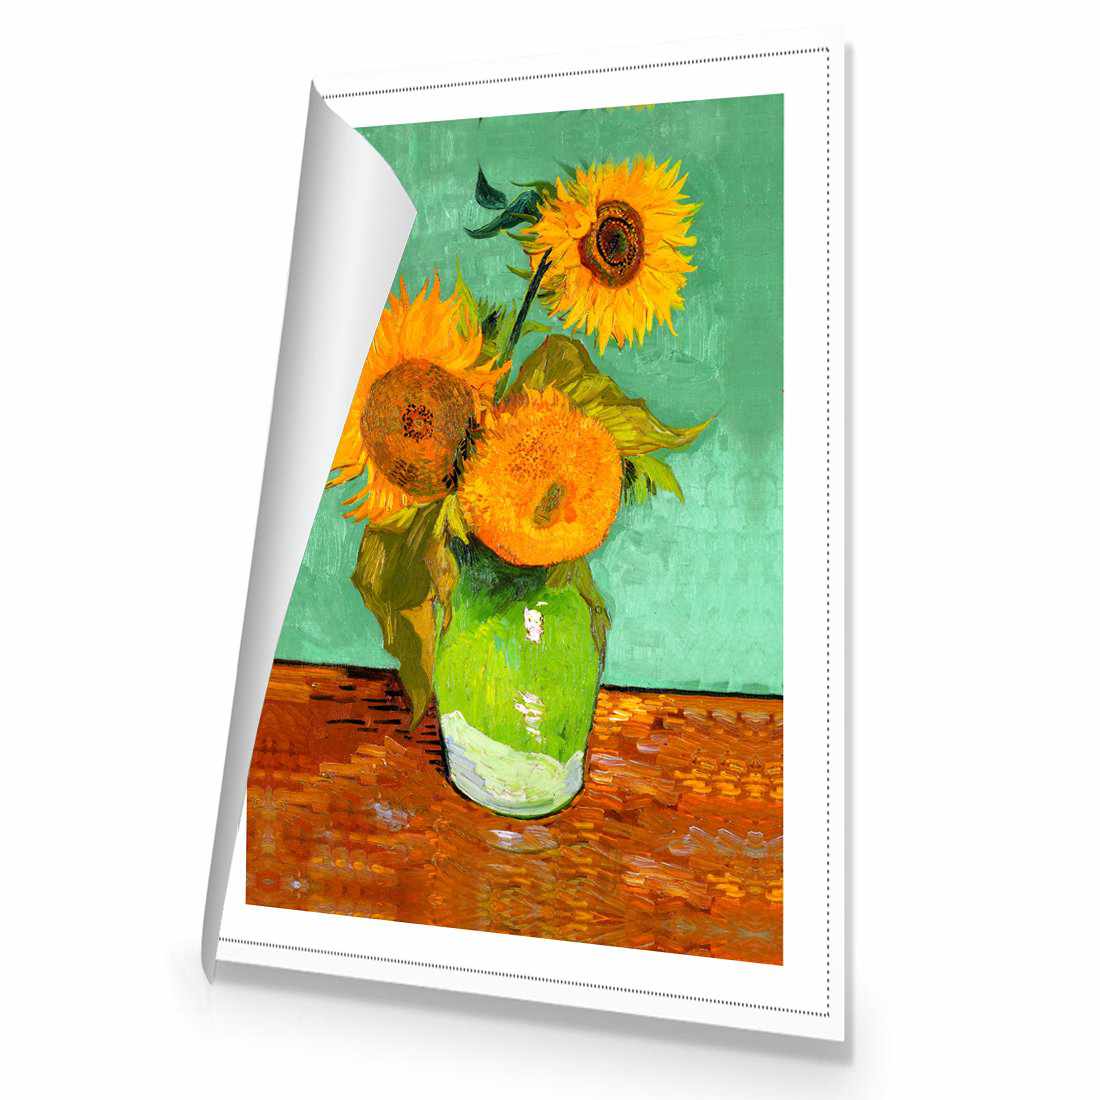 Sunflowers On Green by Van Gogh Canvas Art-Canvas-Wall Art Designs-45x30cm-Rolled Canvas-Wall Art Designs